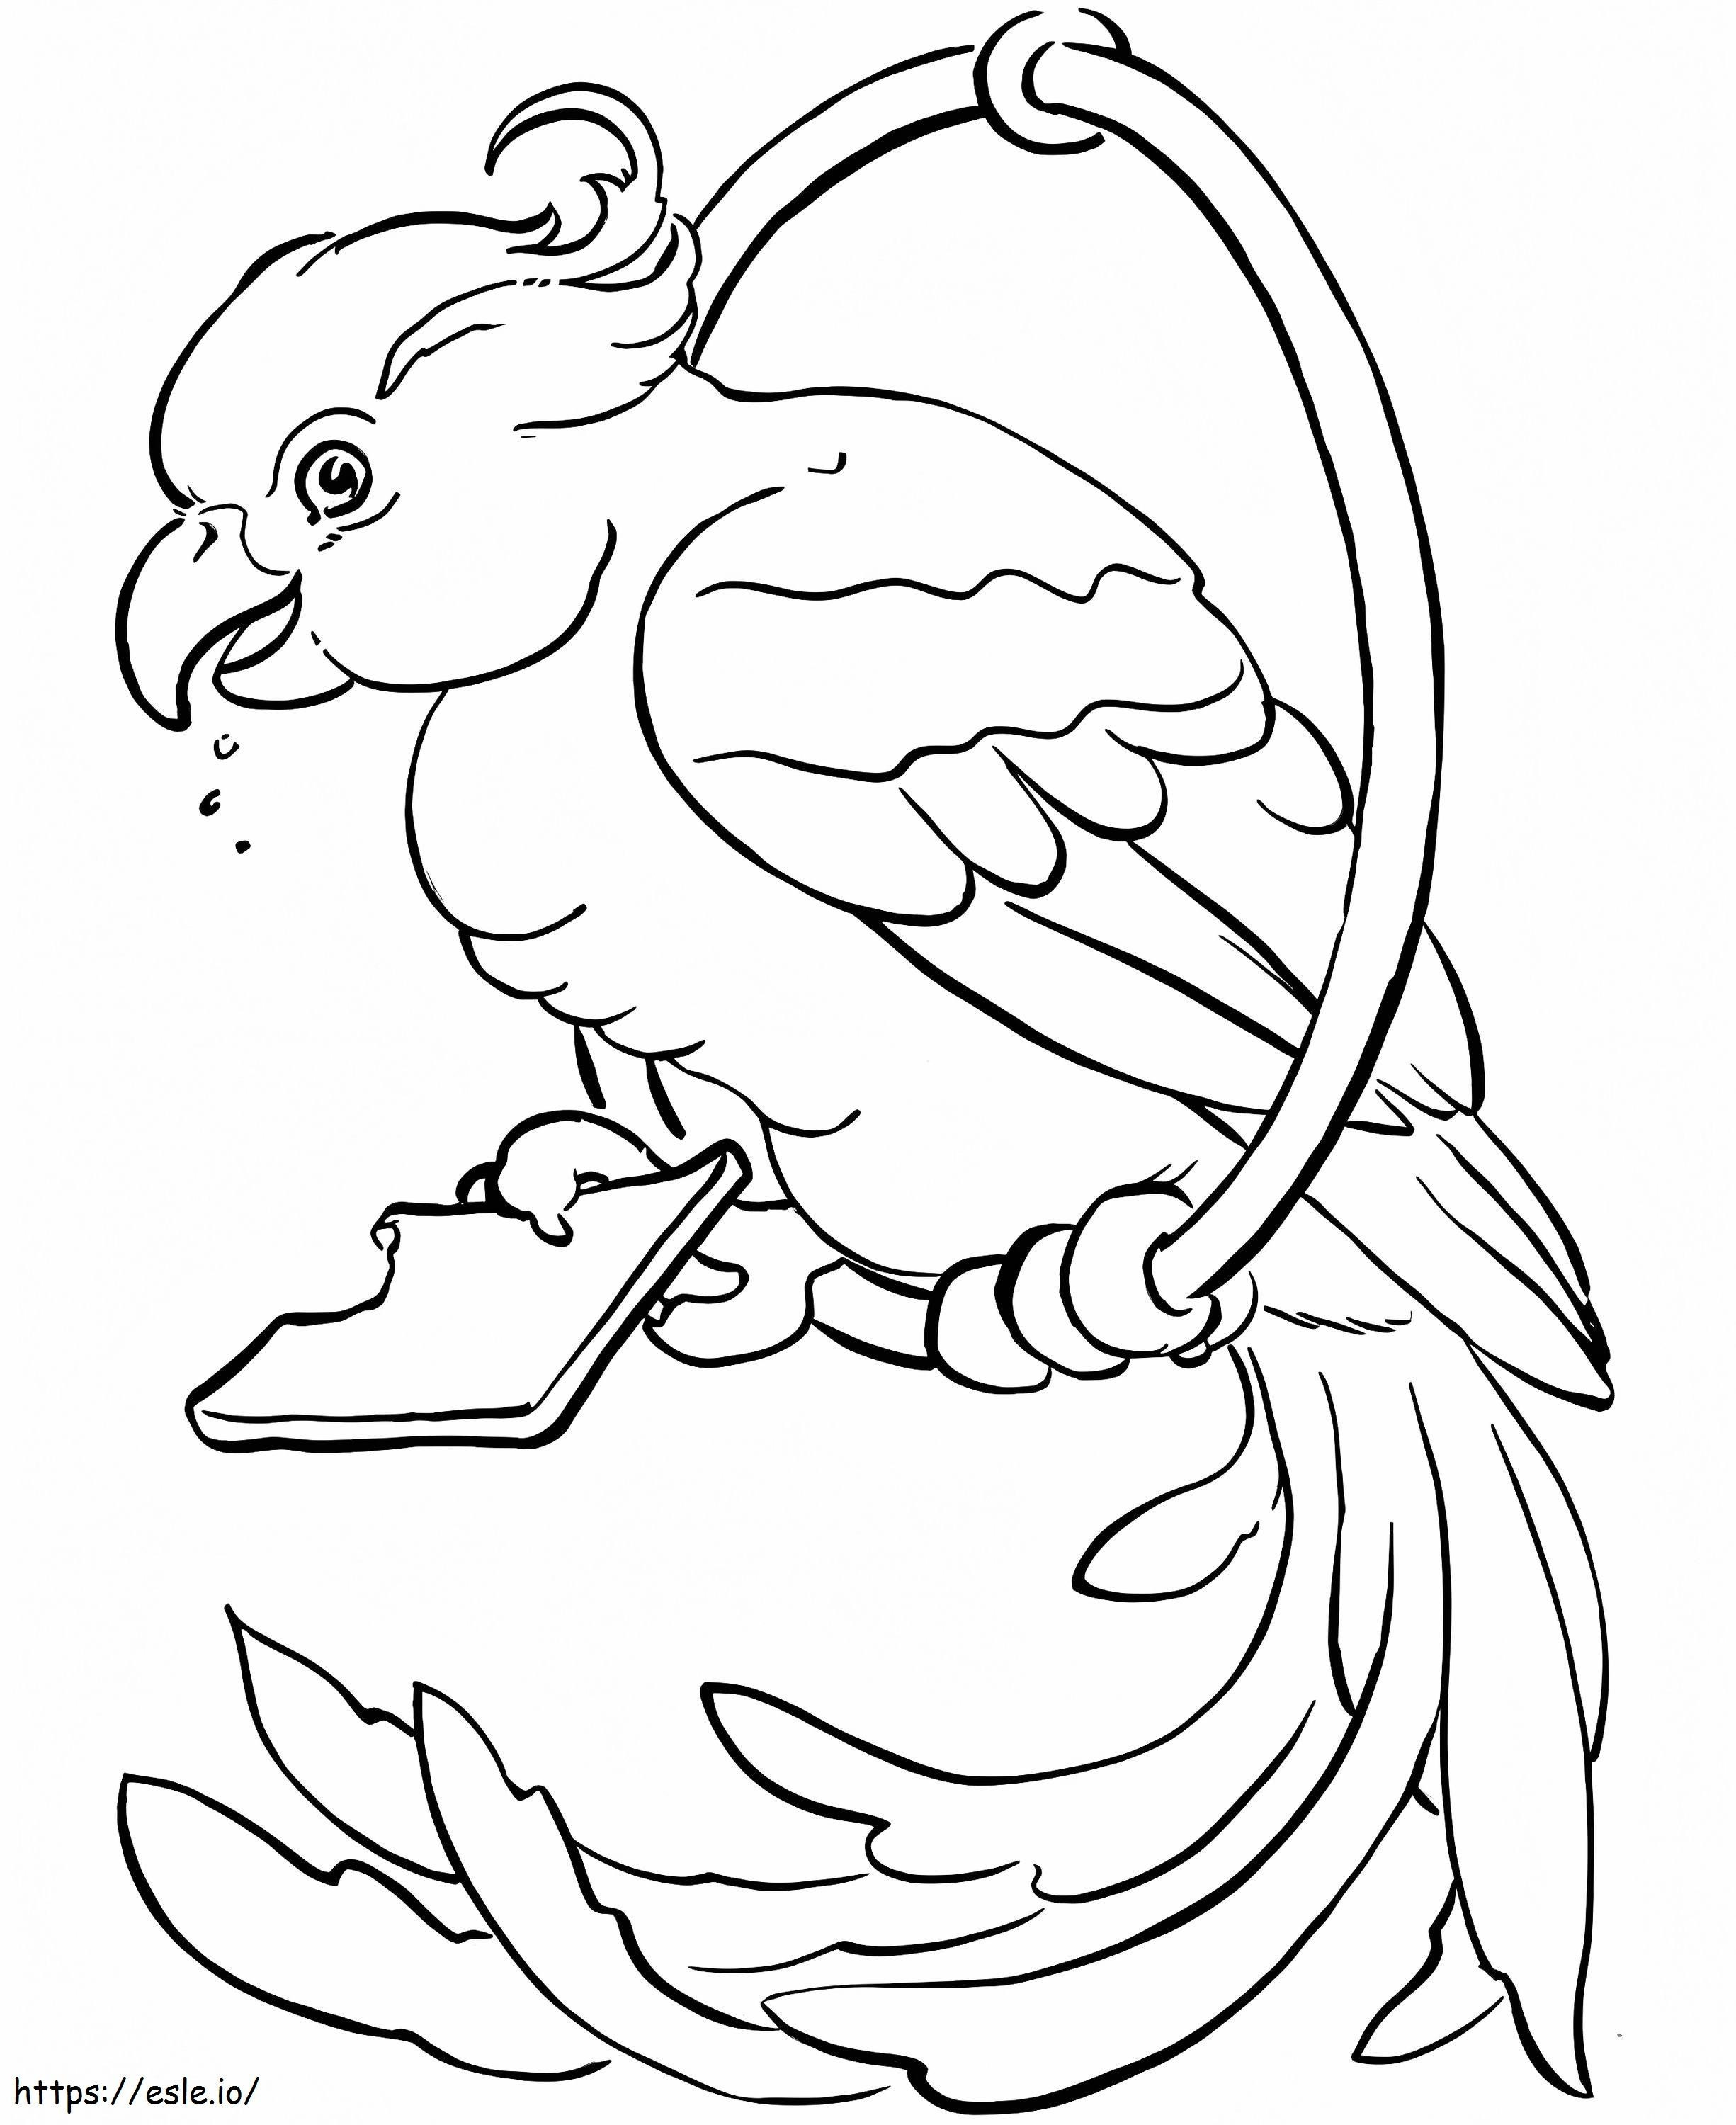 papuga kolorowanka